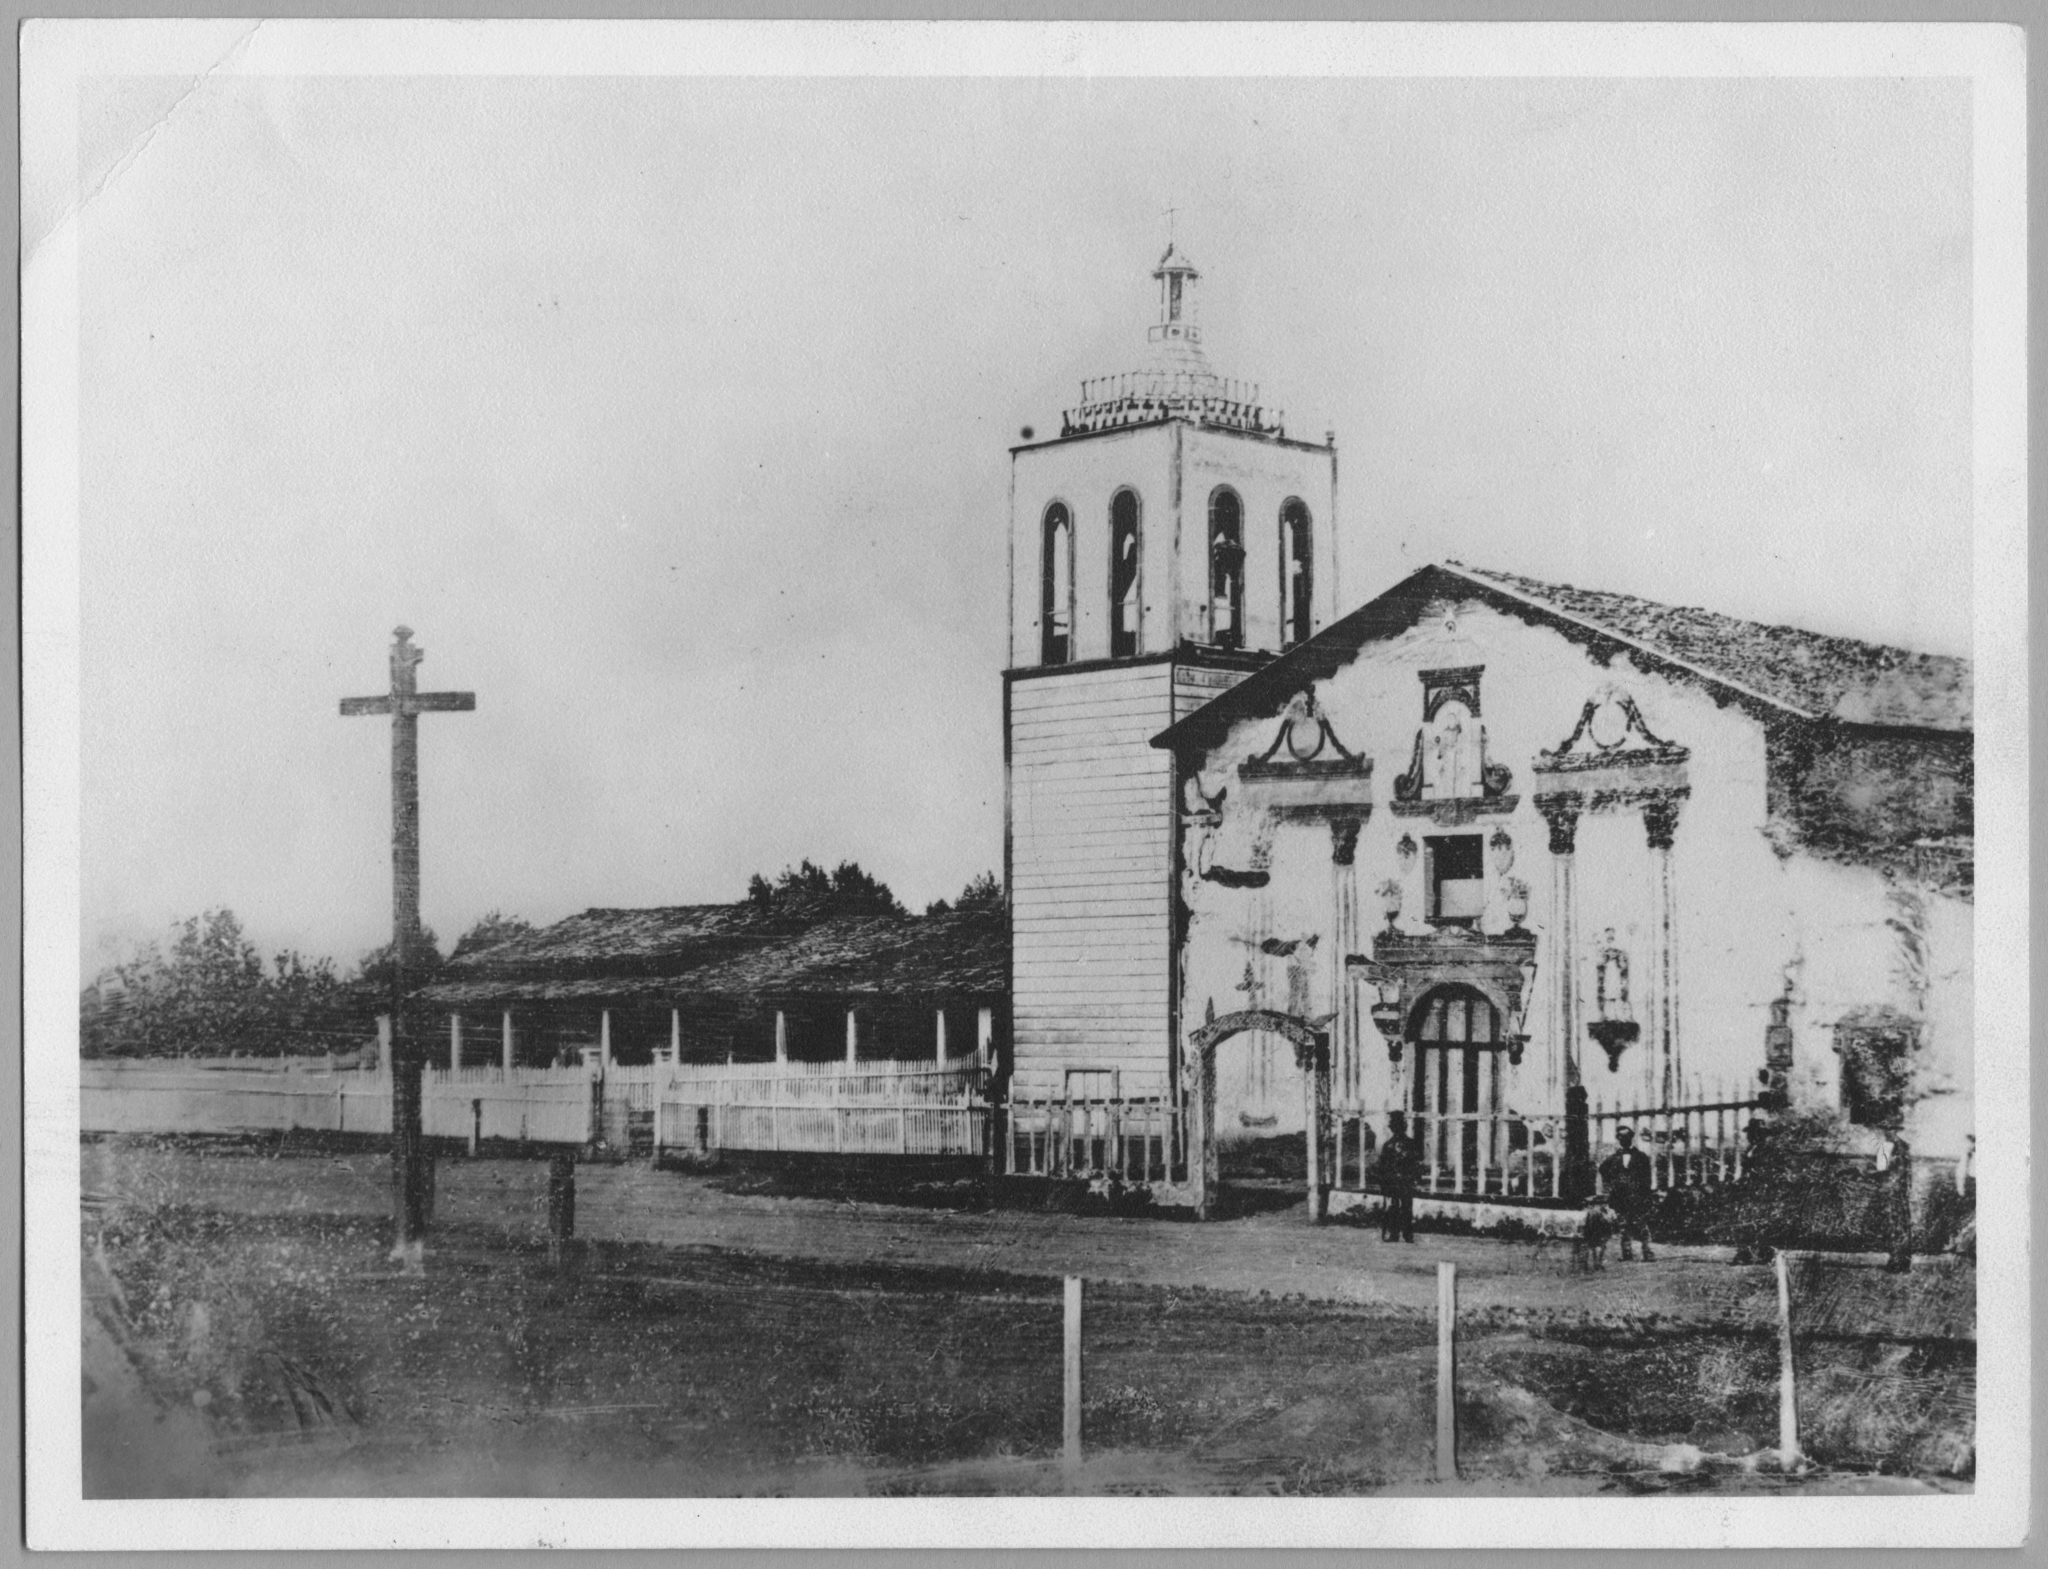 Historic image of the Mission Santa Clara